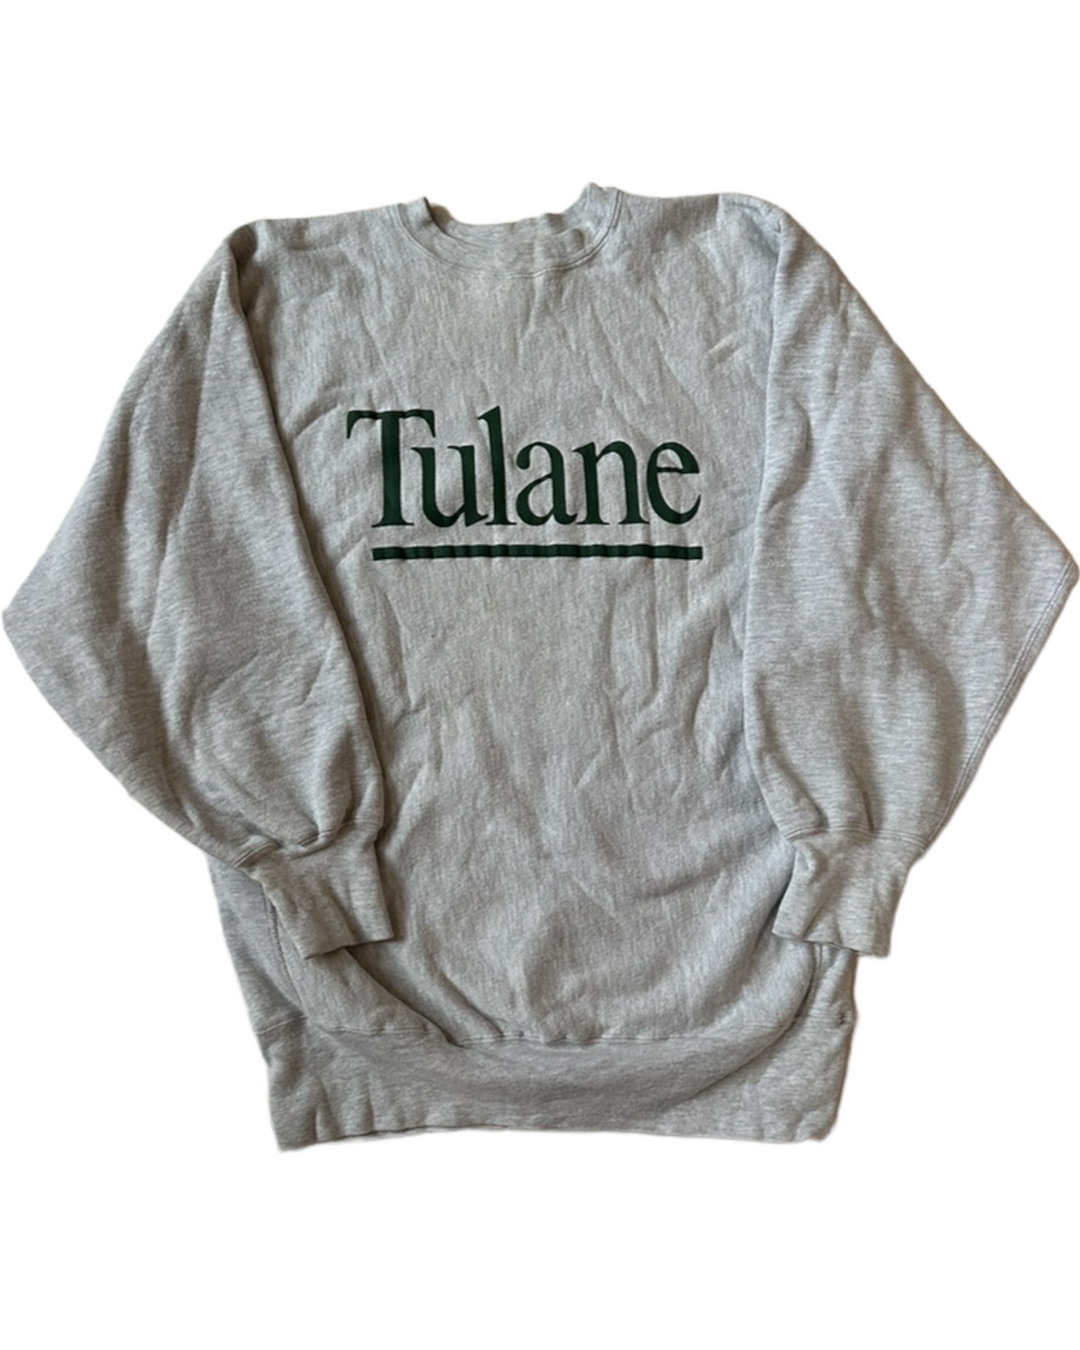 Tulane Rare Vintage Sweatshirt